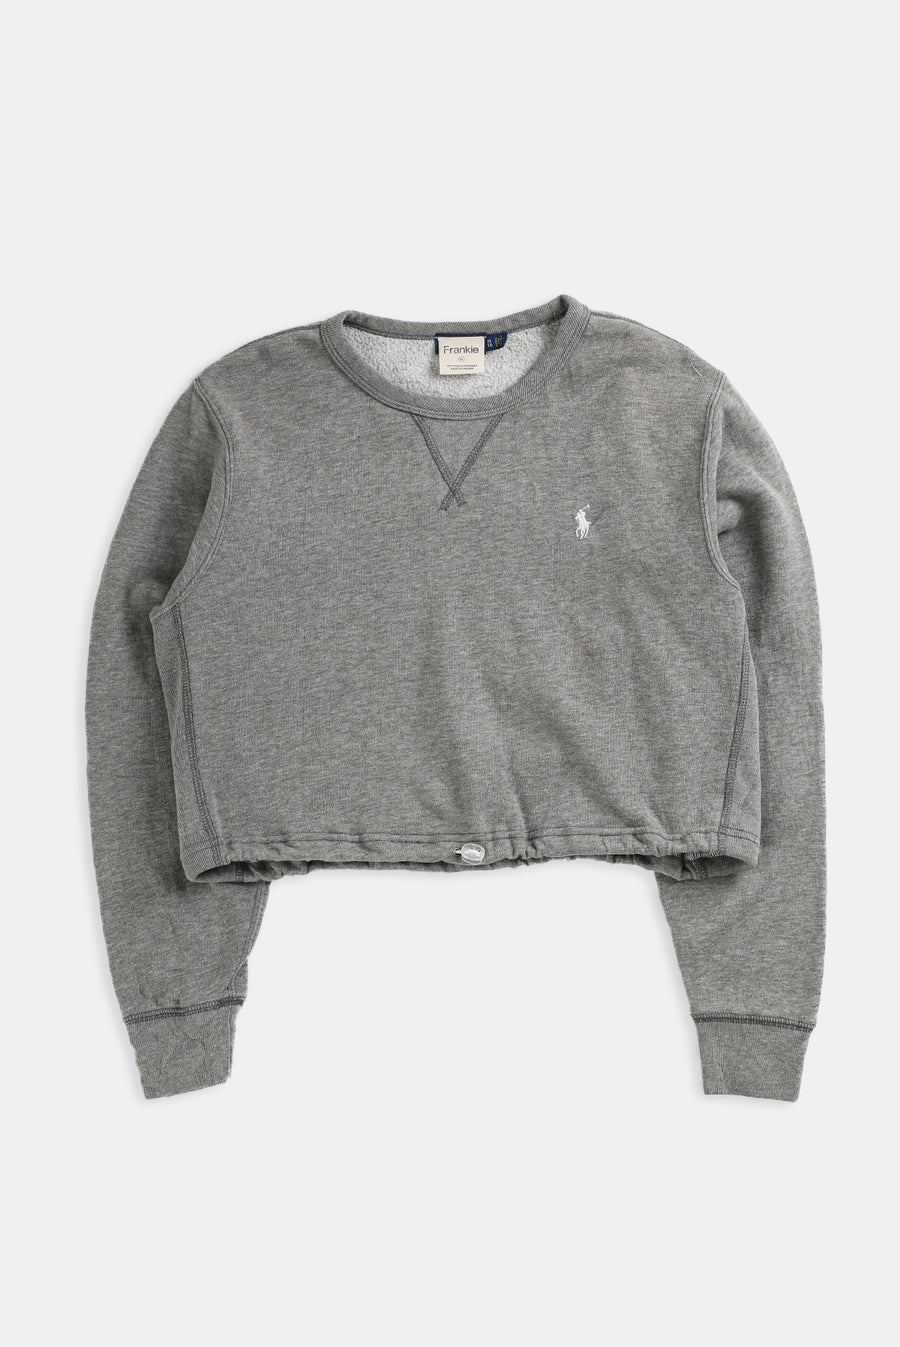 Rework Cinched Crop Sweatshirt - XL